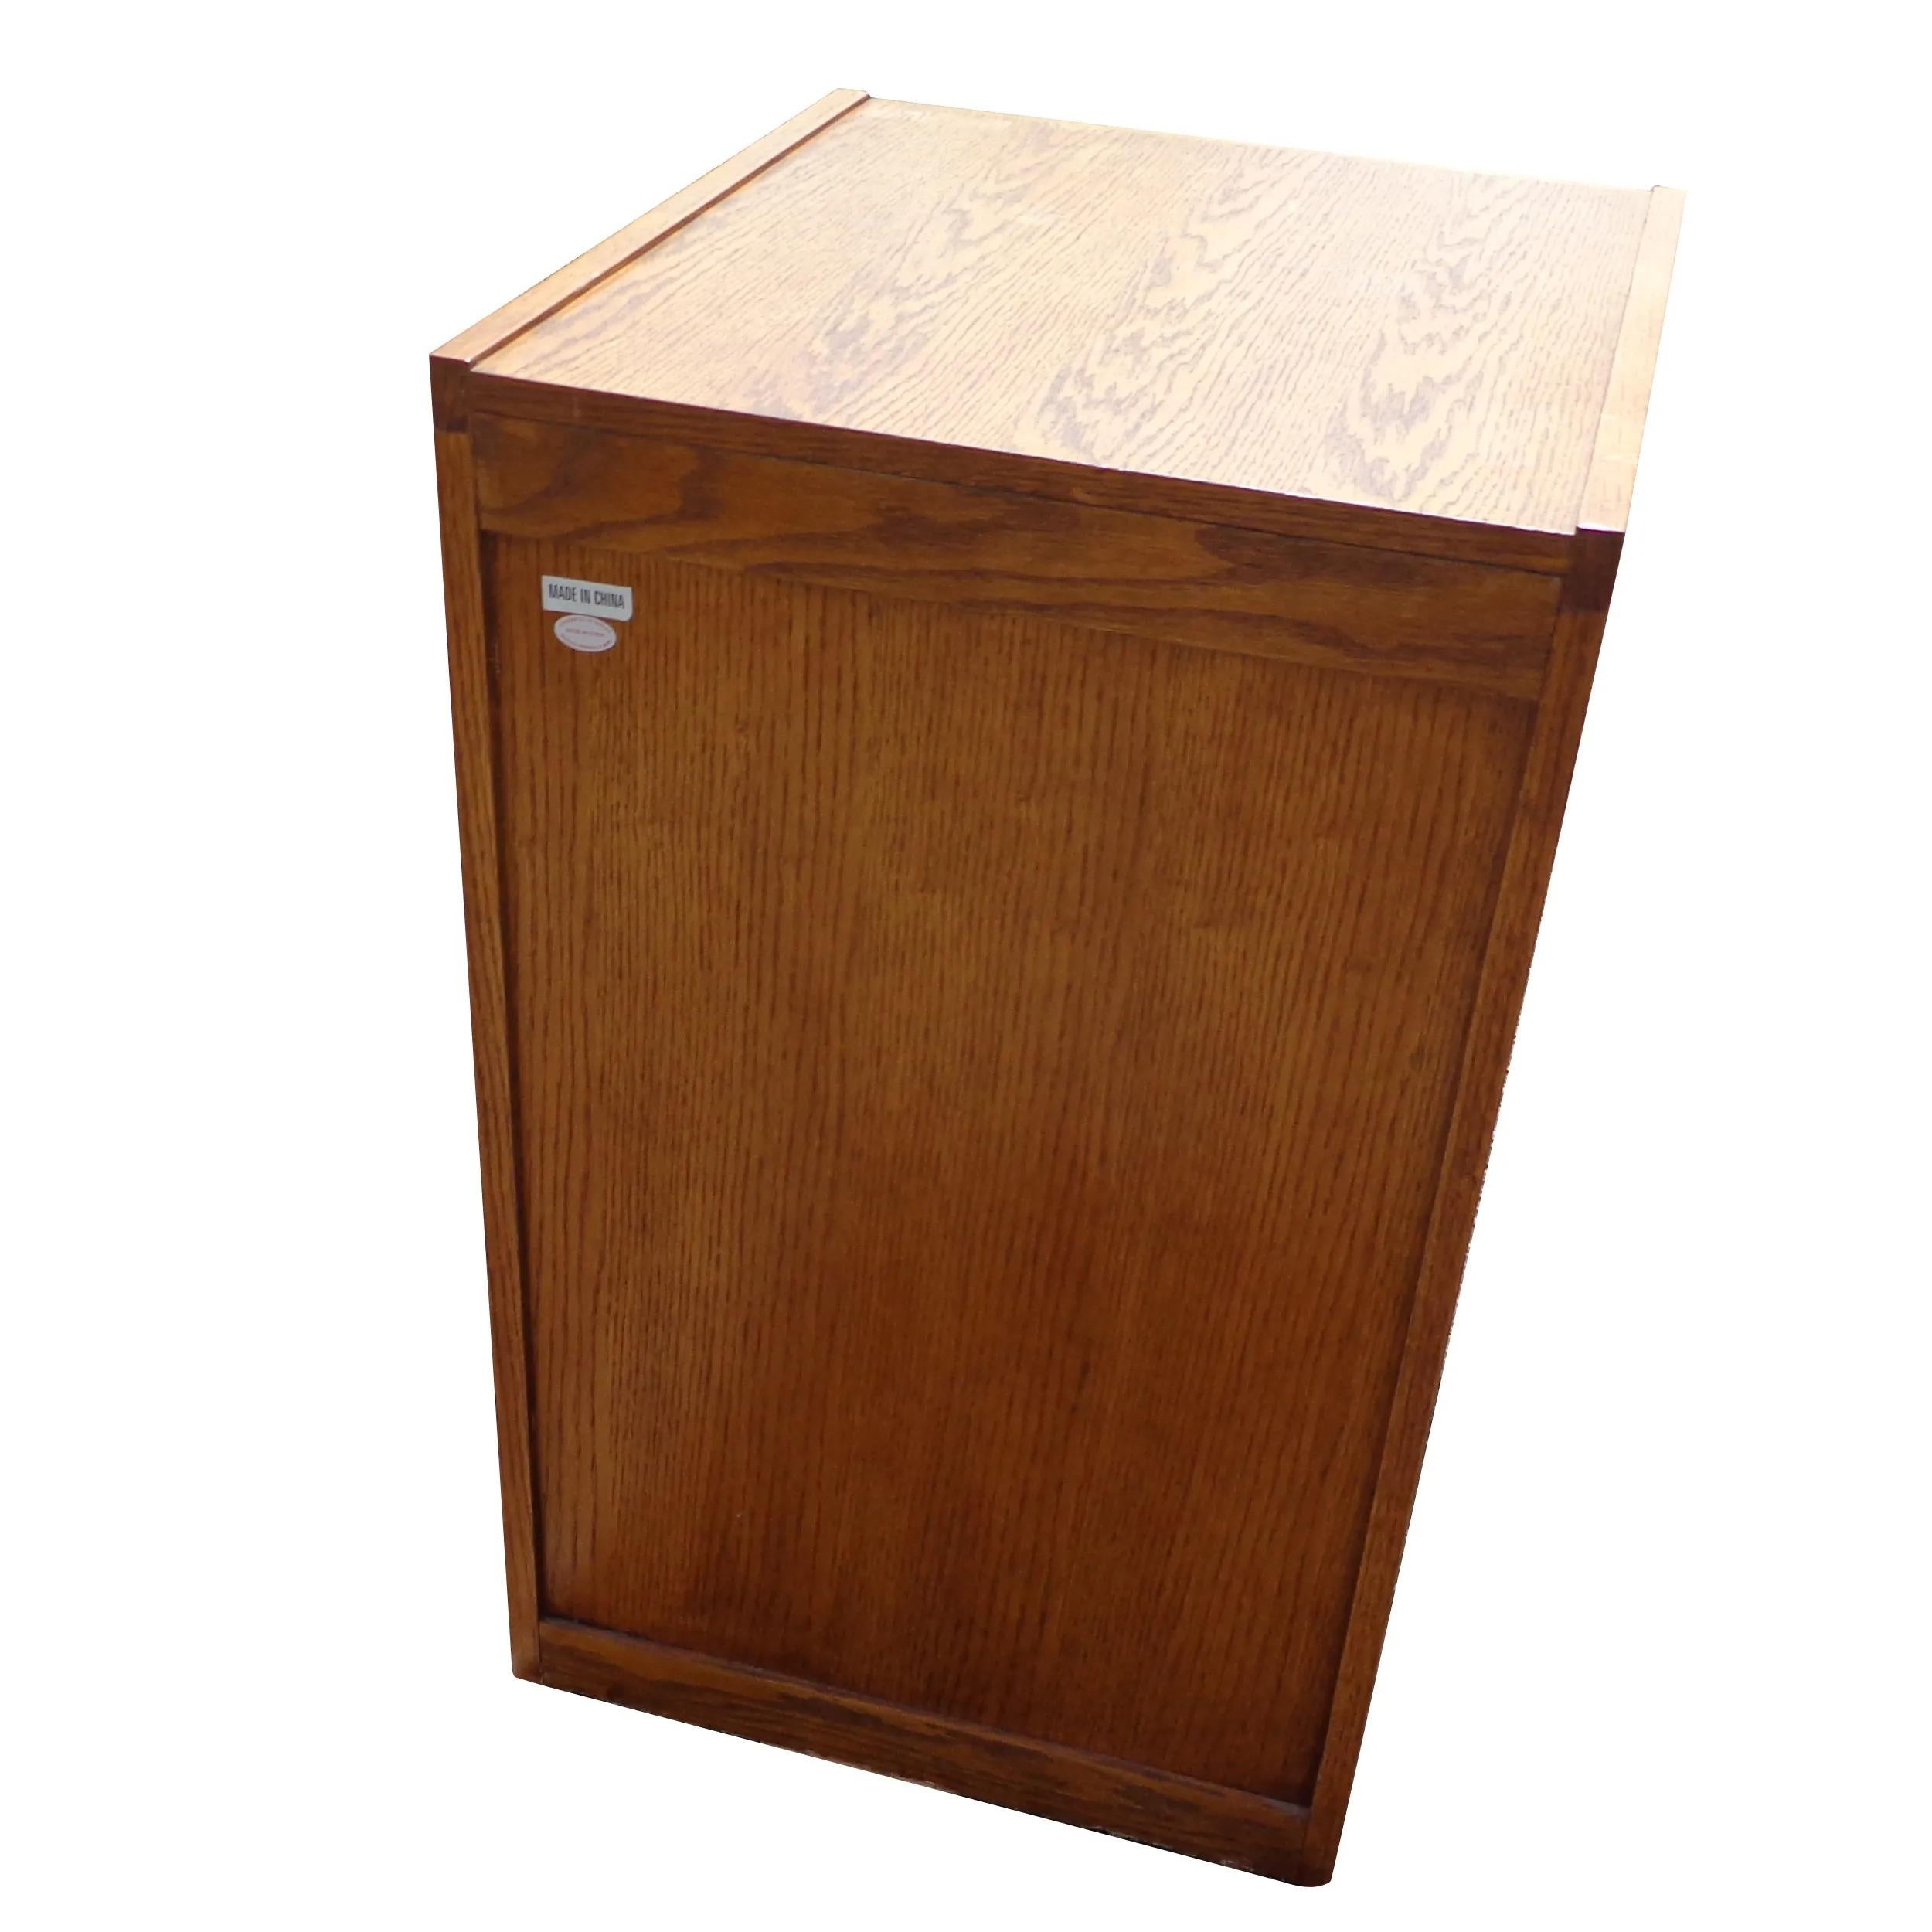 oak file cabinets for sale